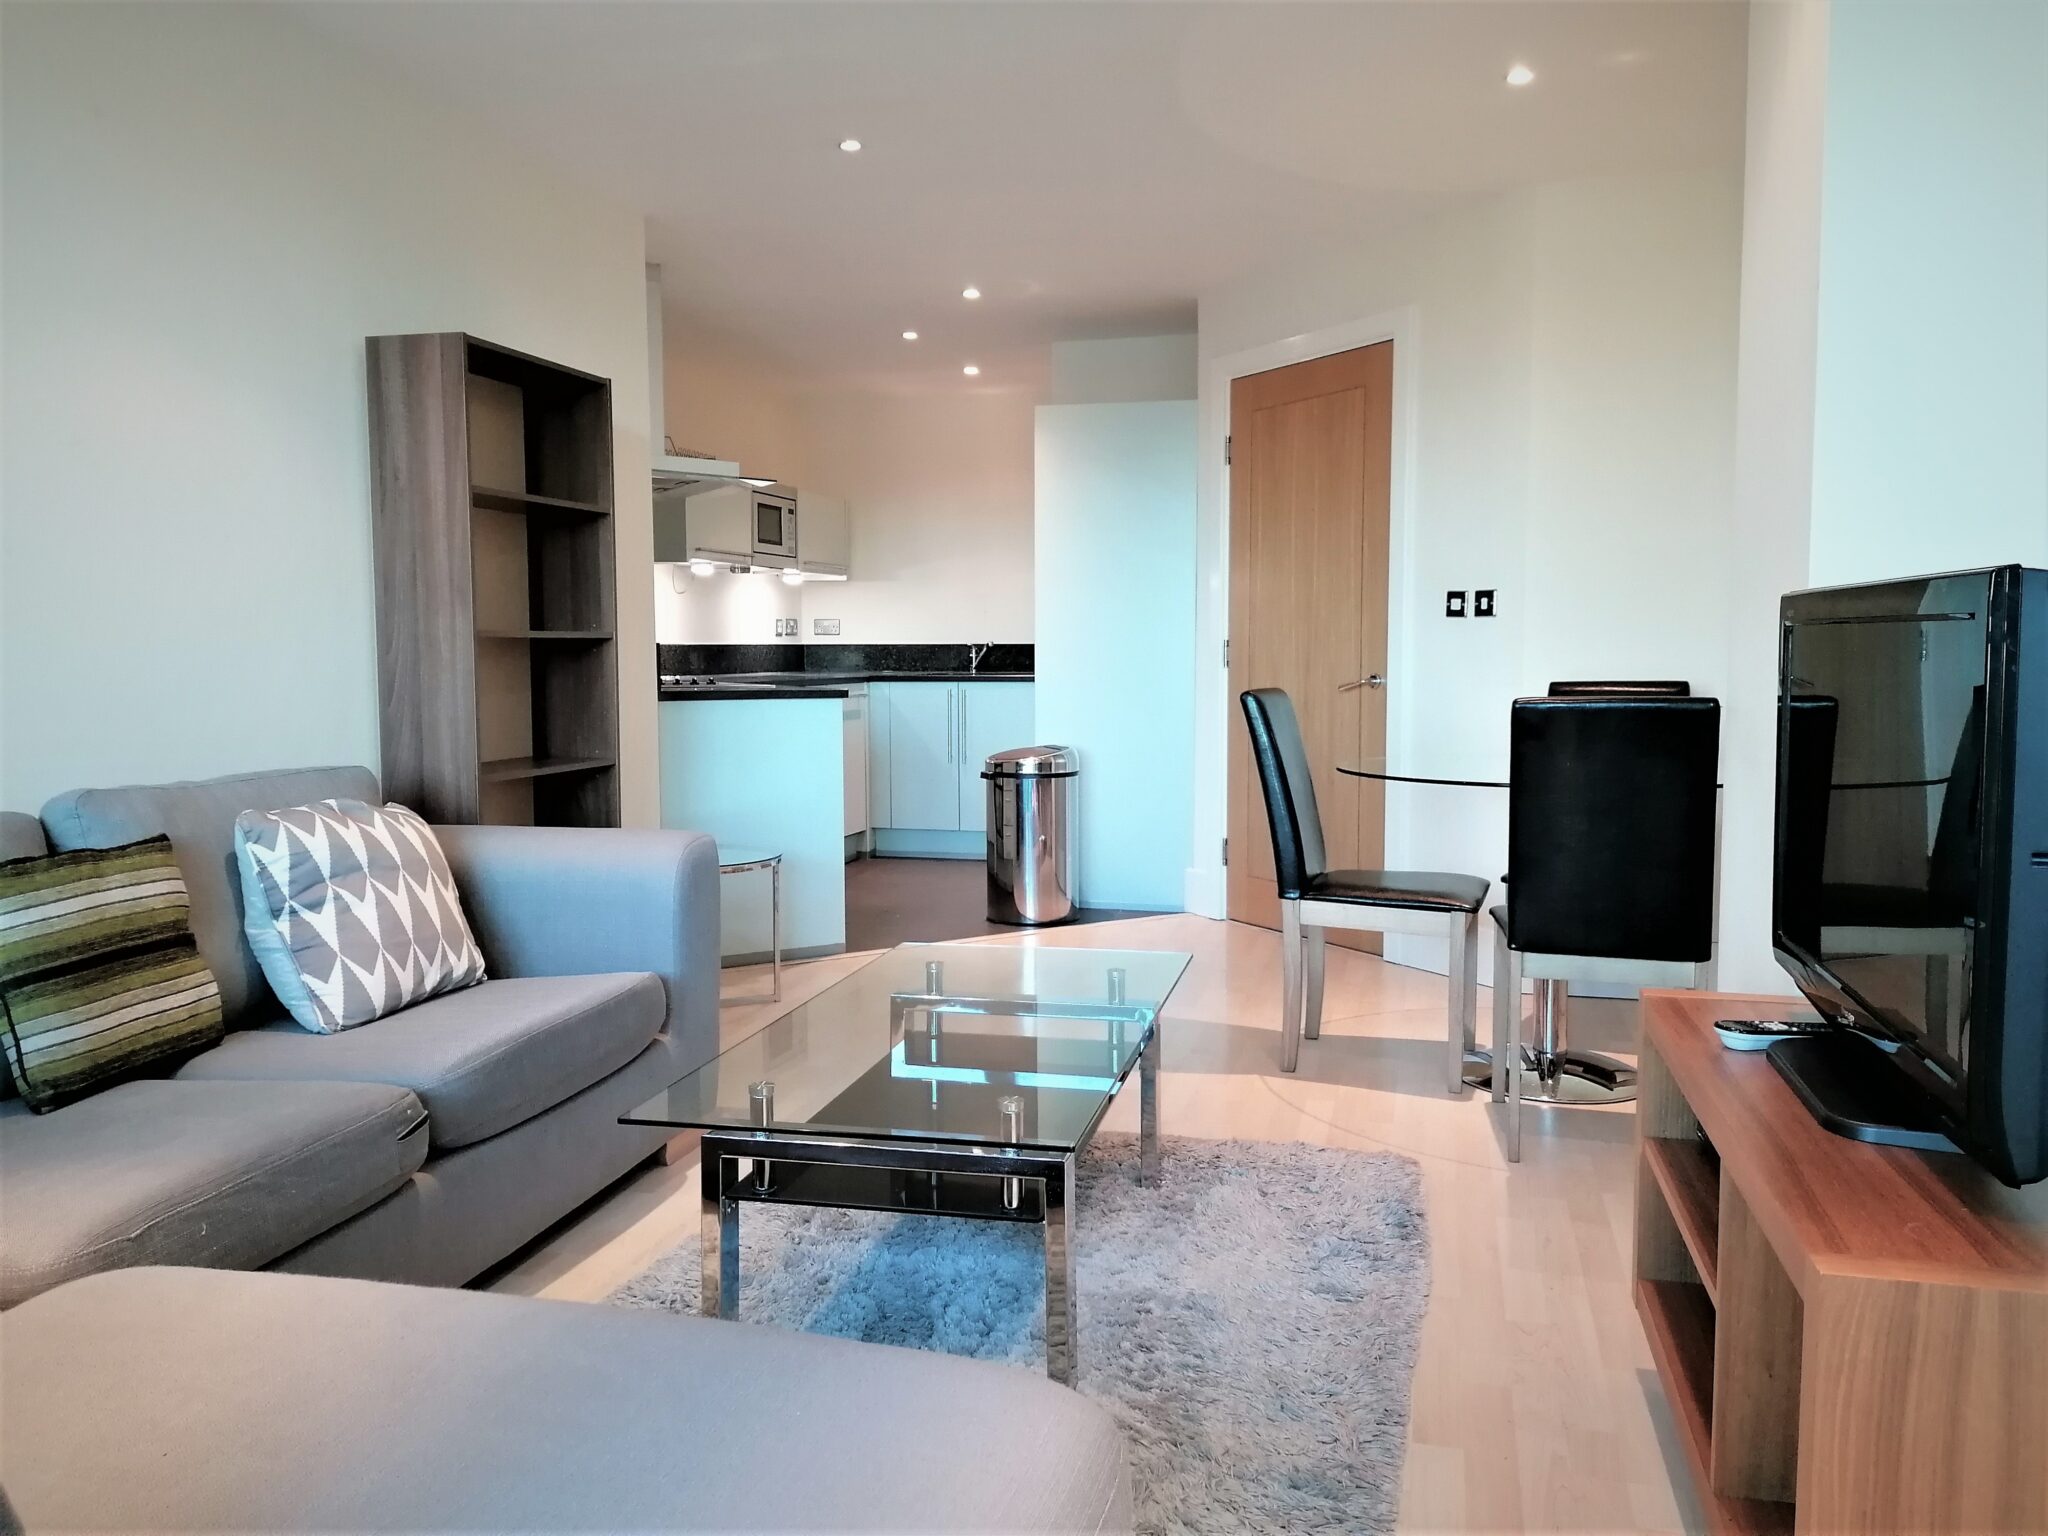 Albert Apartments - South London Serviced Apartments - London | Urban Stay